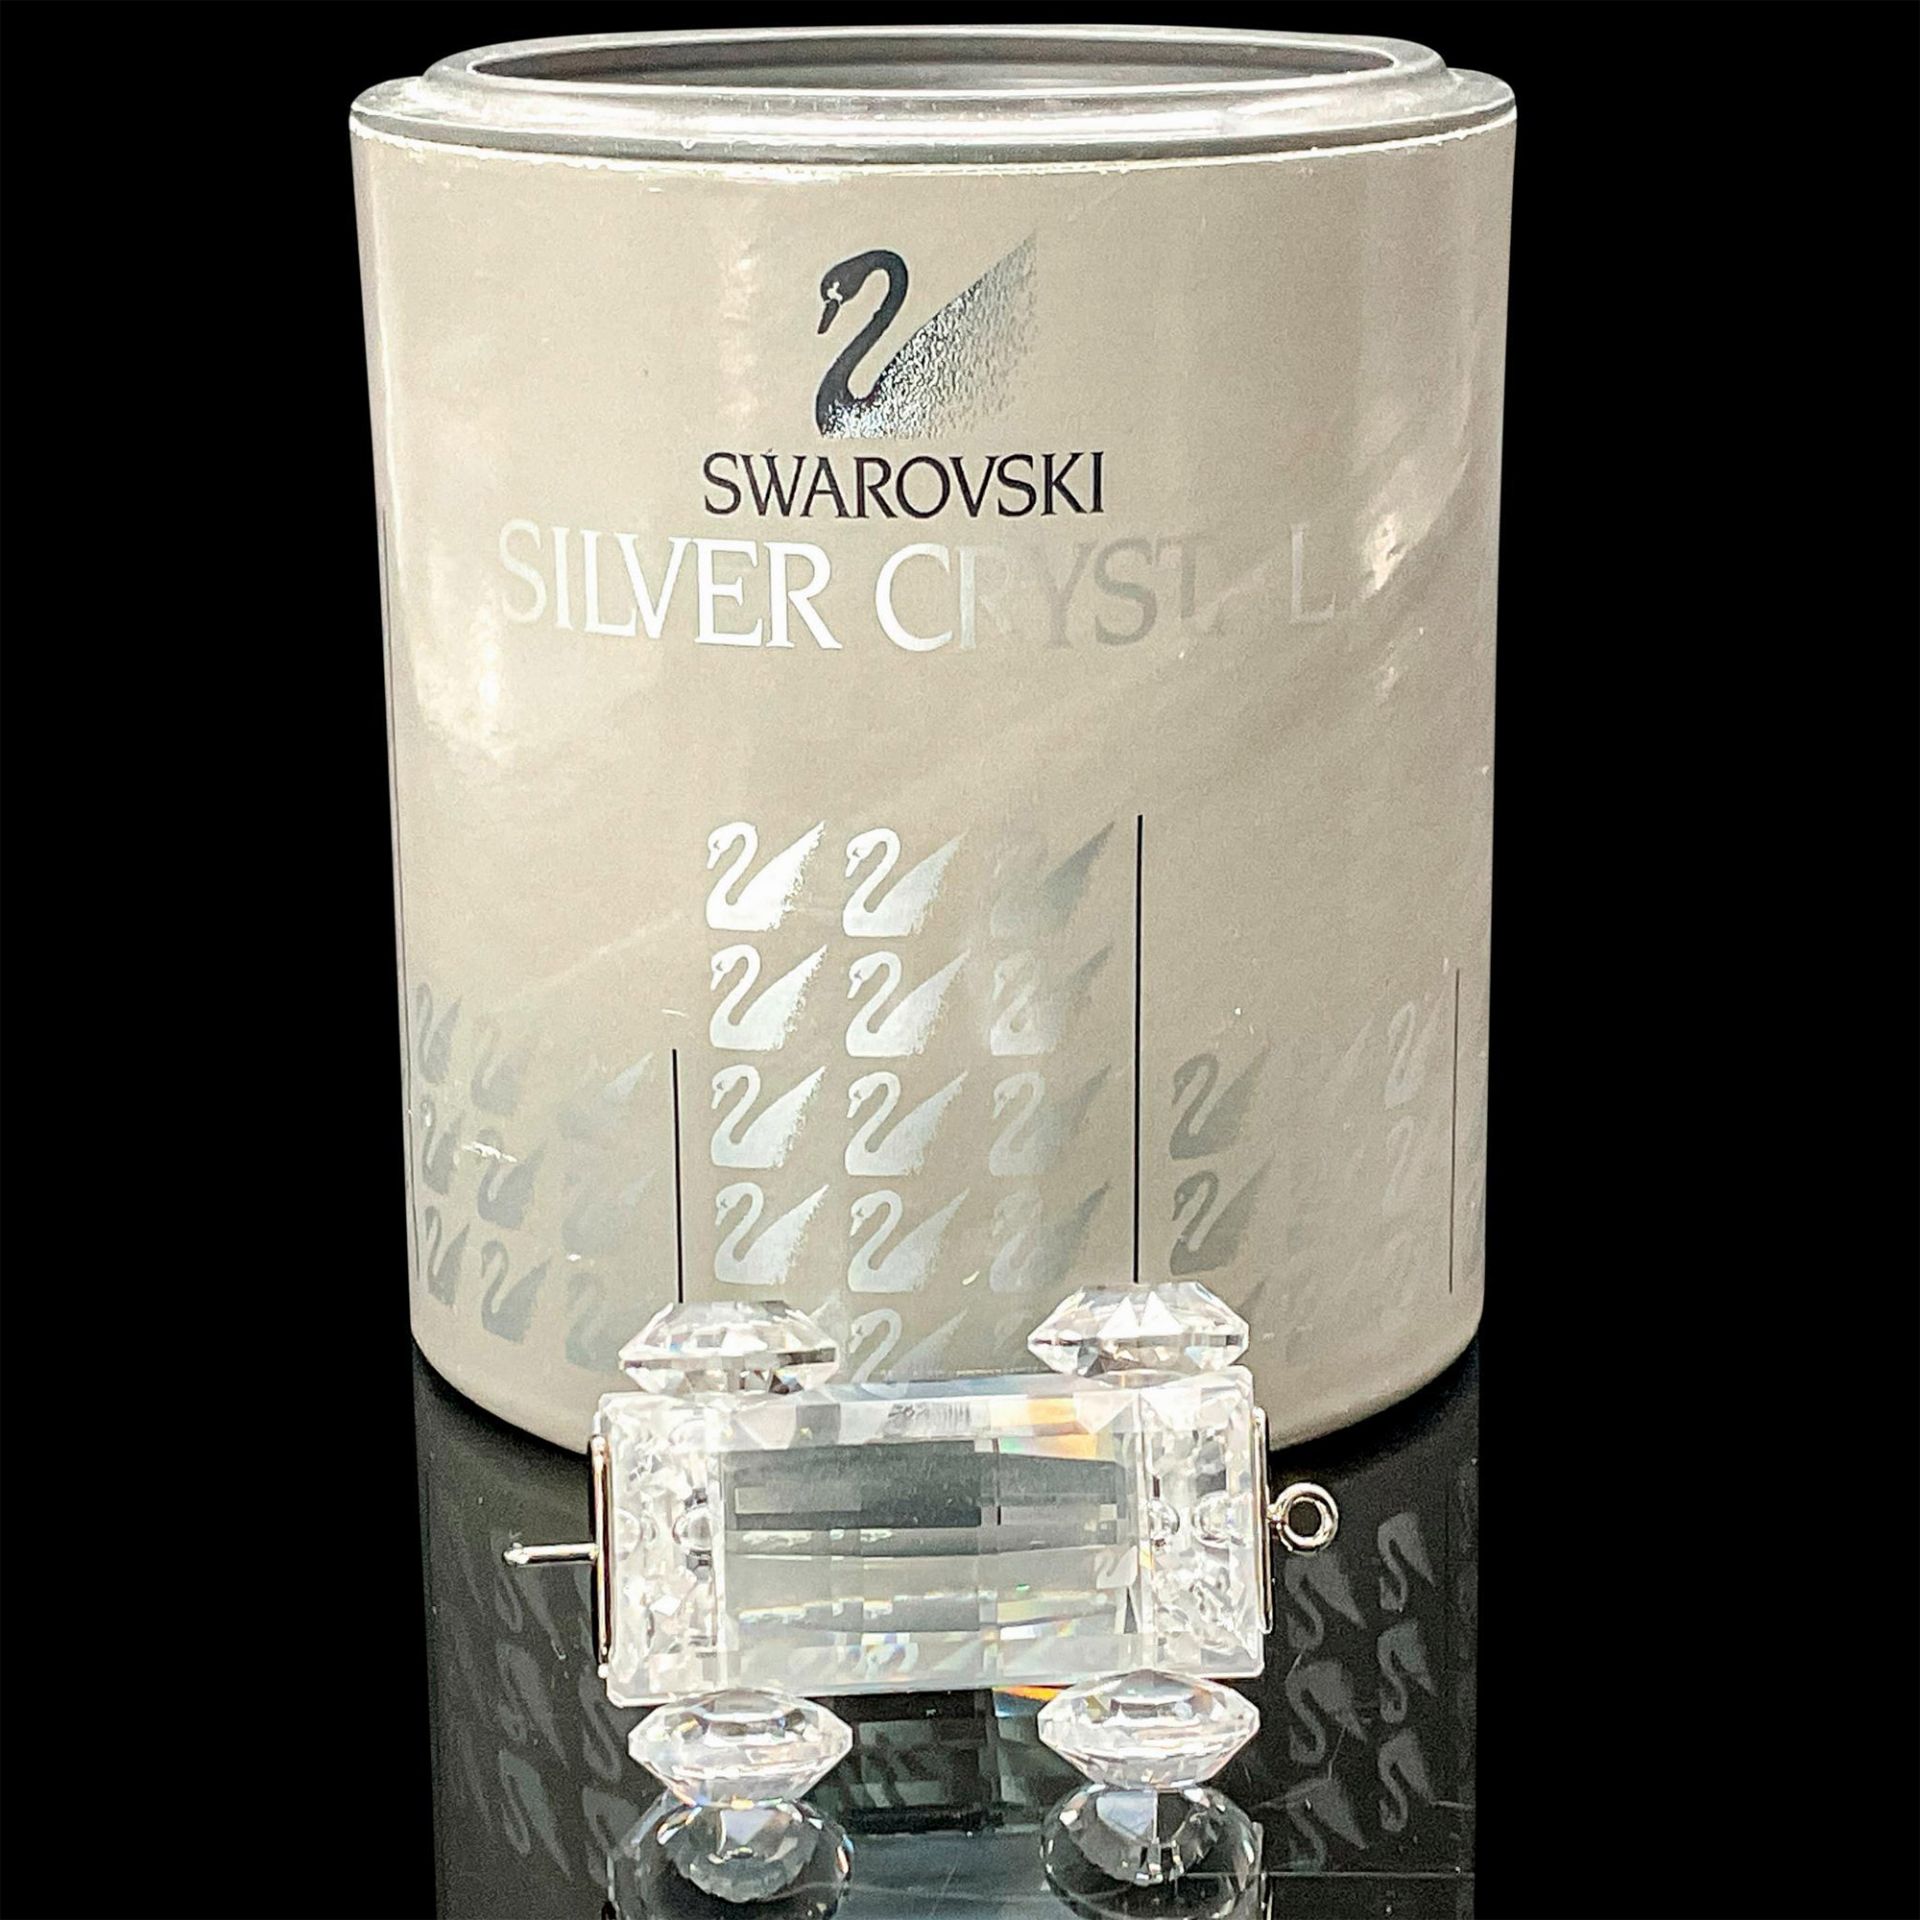 Swarovski Silver Crystal Figurine, Tipping Wagon - Image 3 of 3